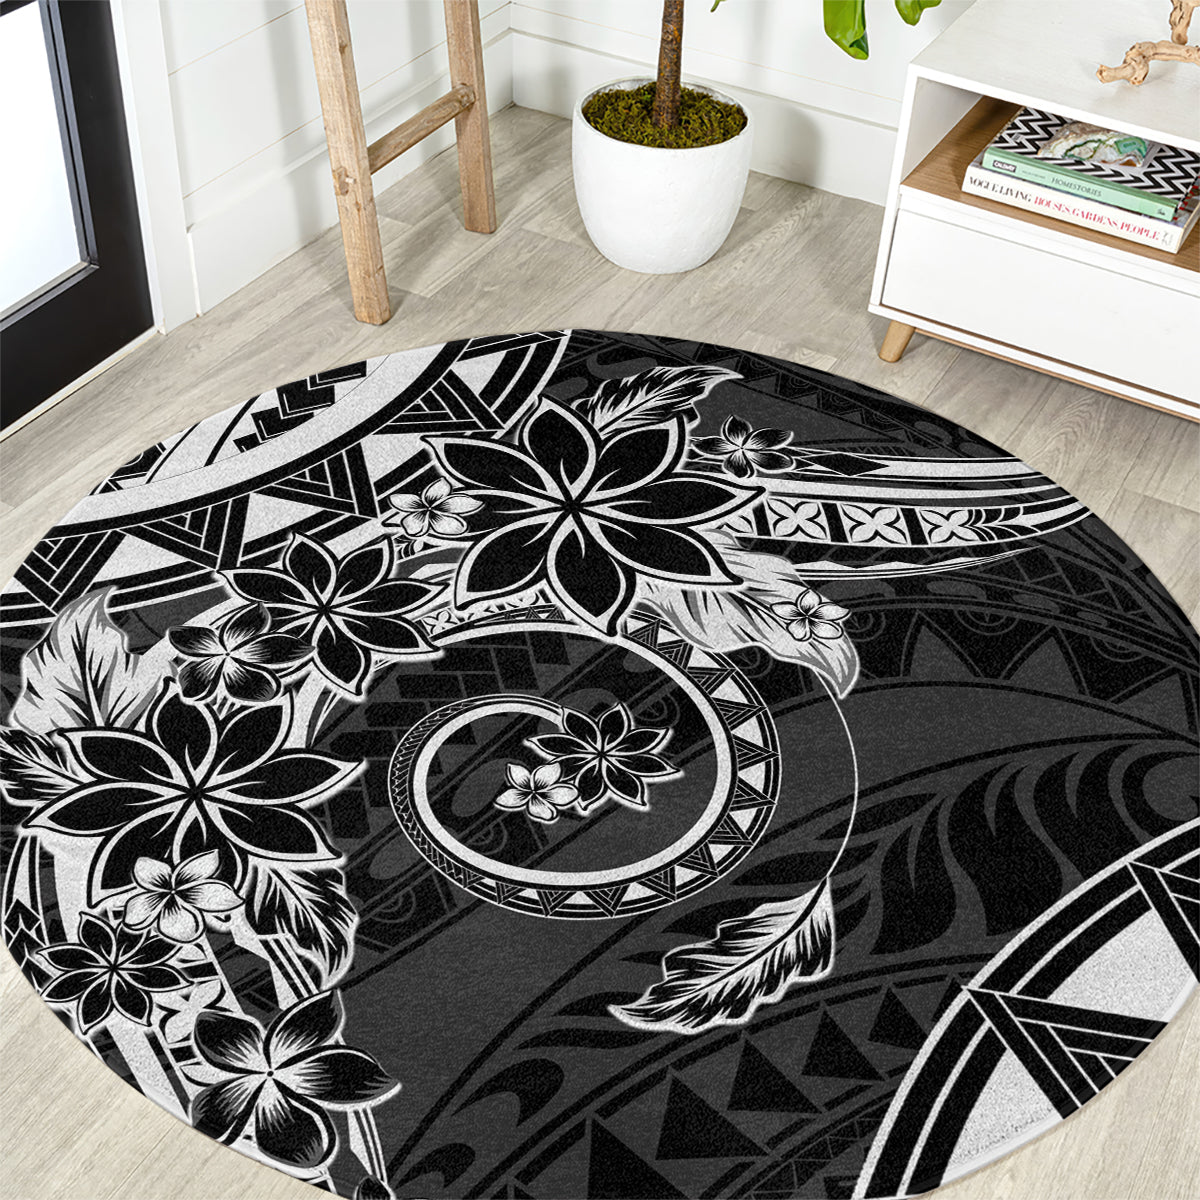 Polynesian Pattern With Plumeria Flowers Round Carpet Black